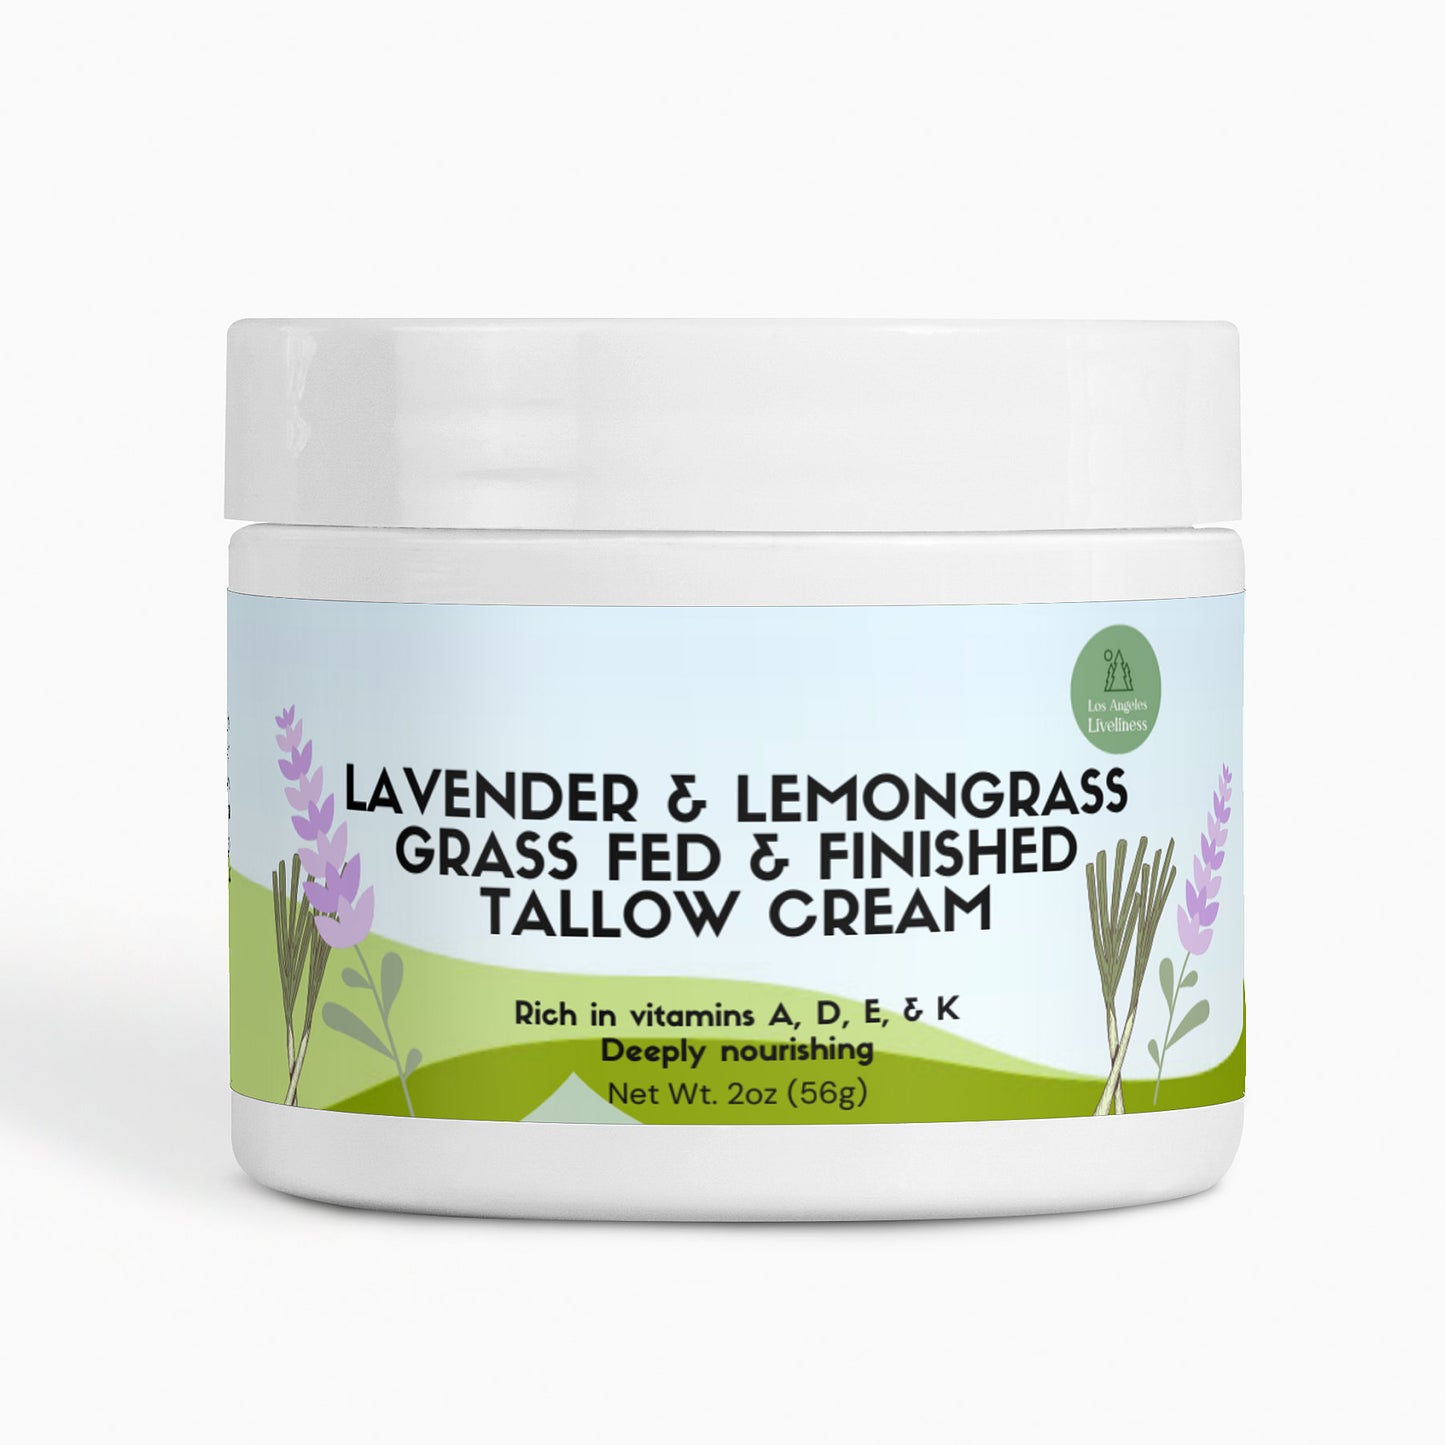 Lavender & Lemongrass Tallow Cream